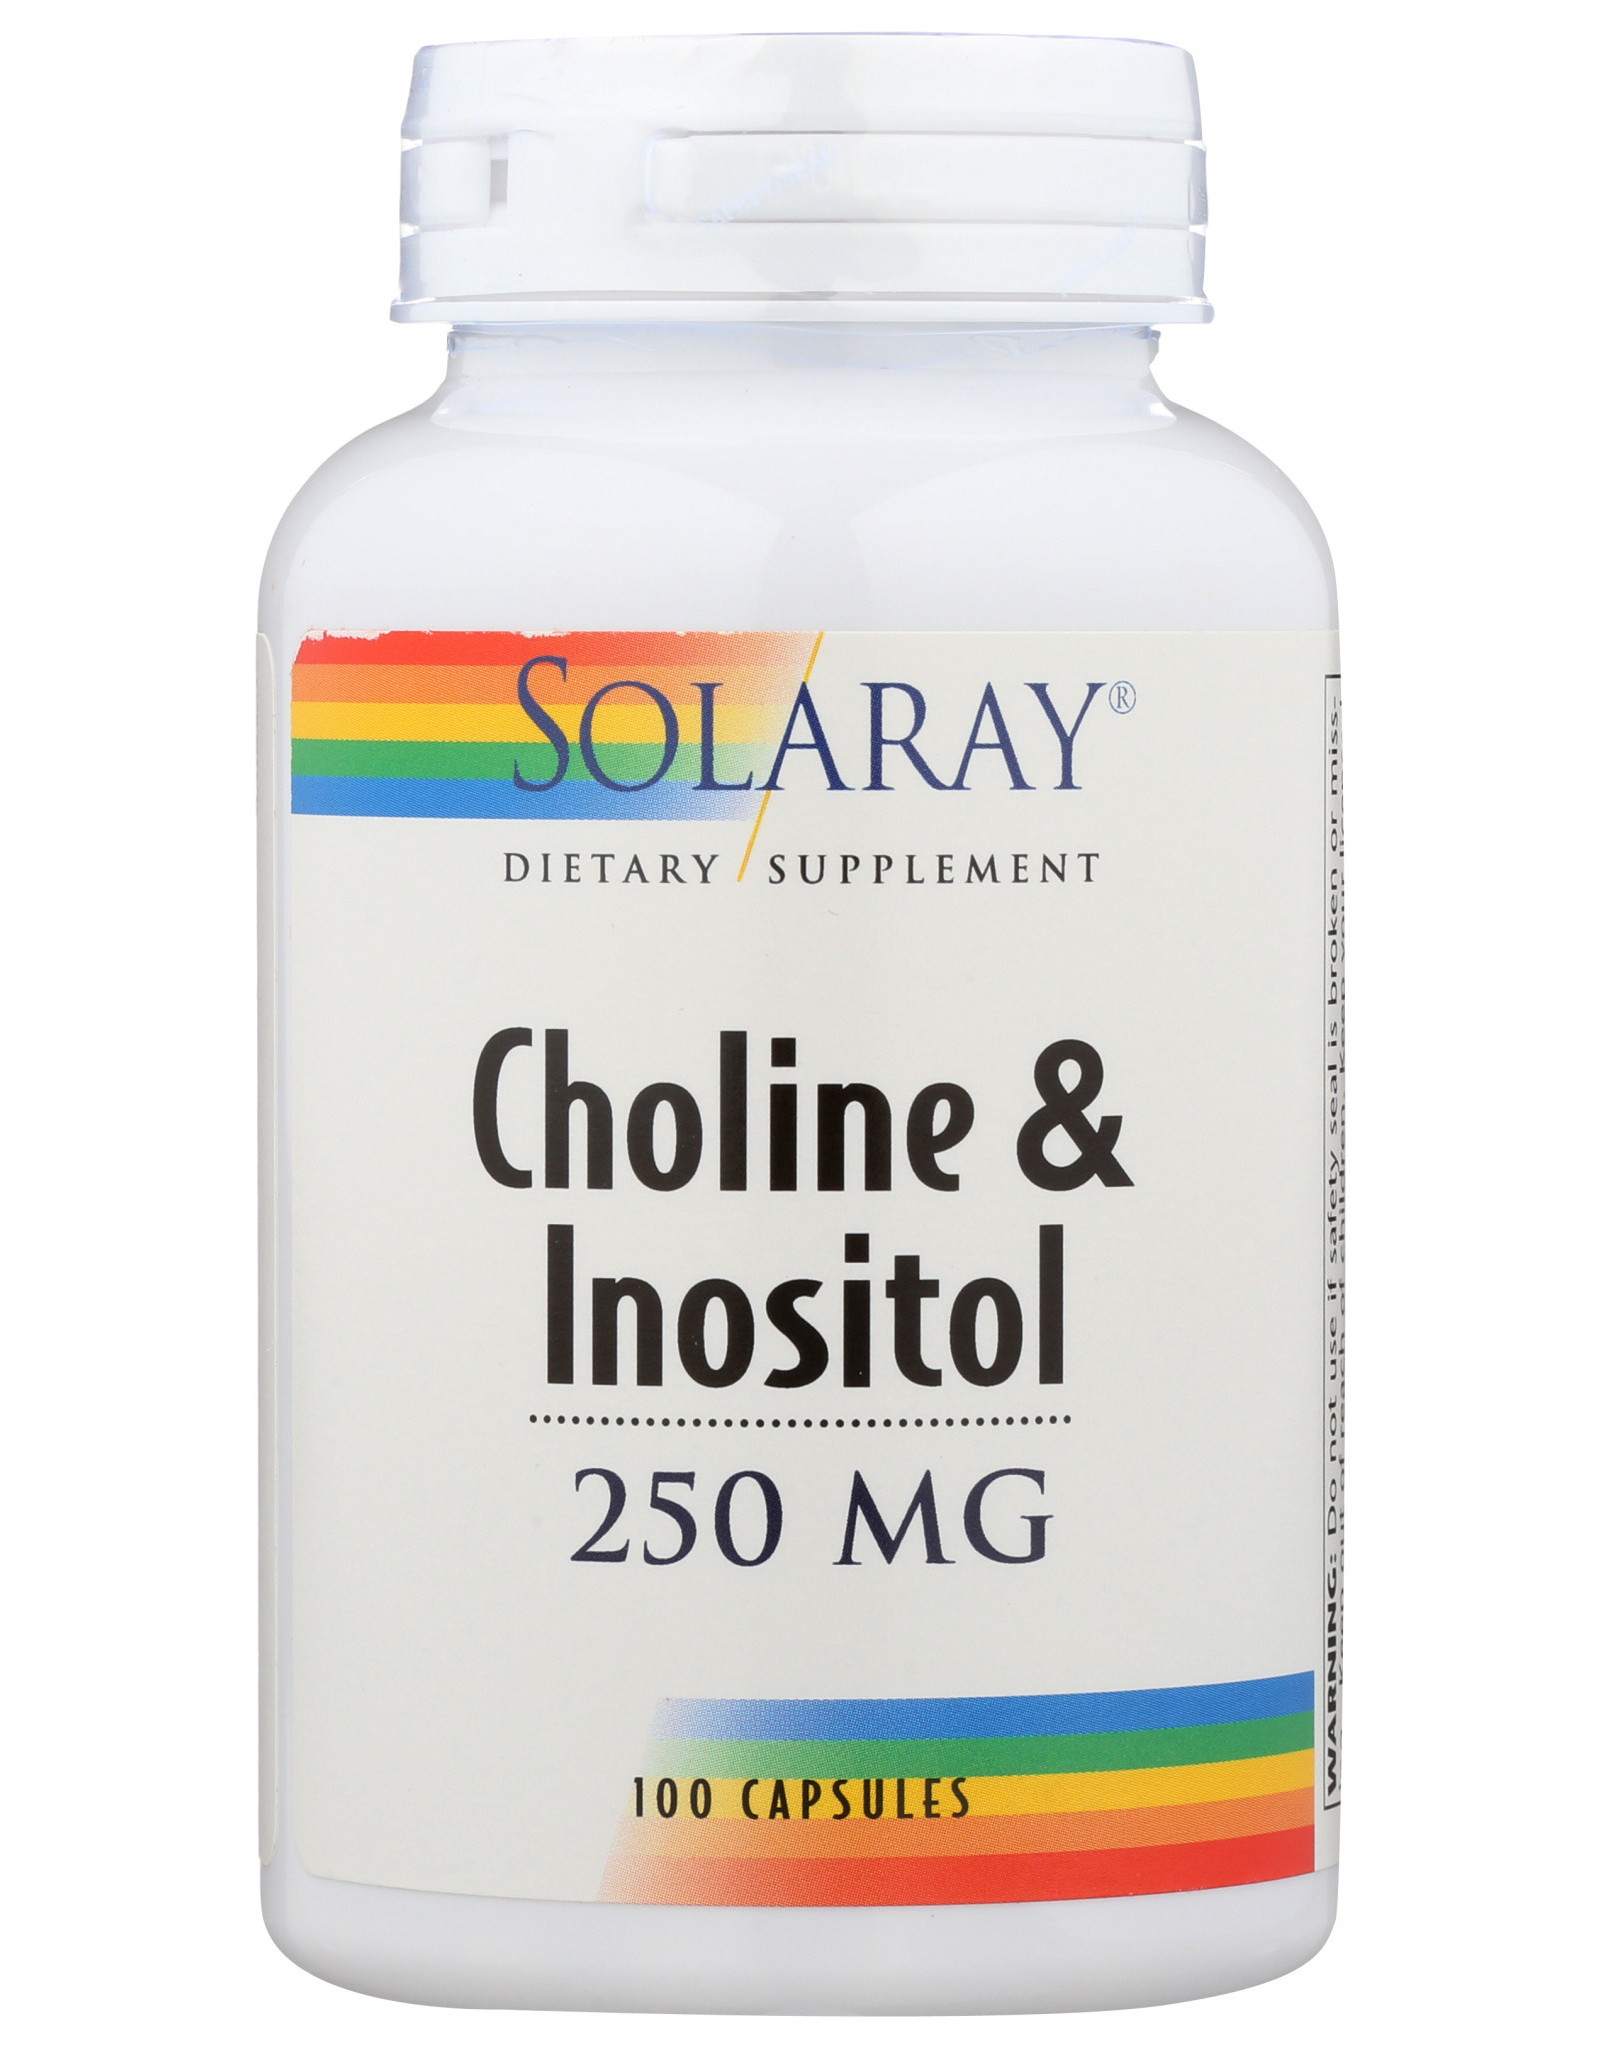 X Solaray Choline & Inositol 250mg 180 Capsules